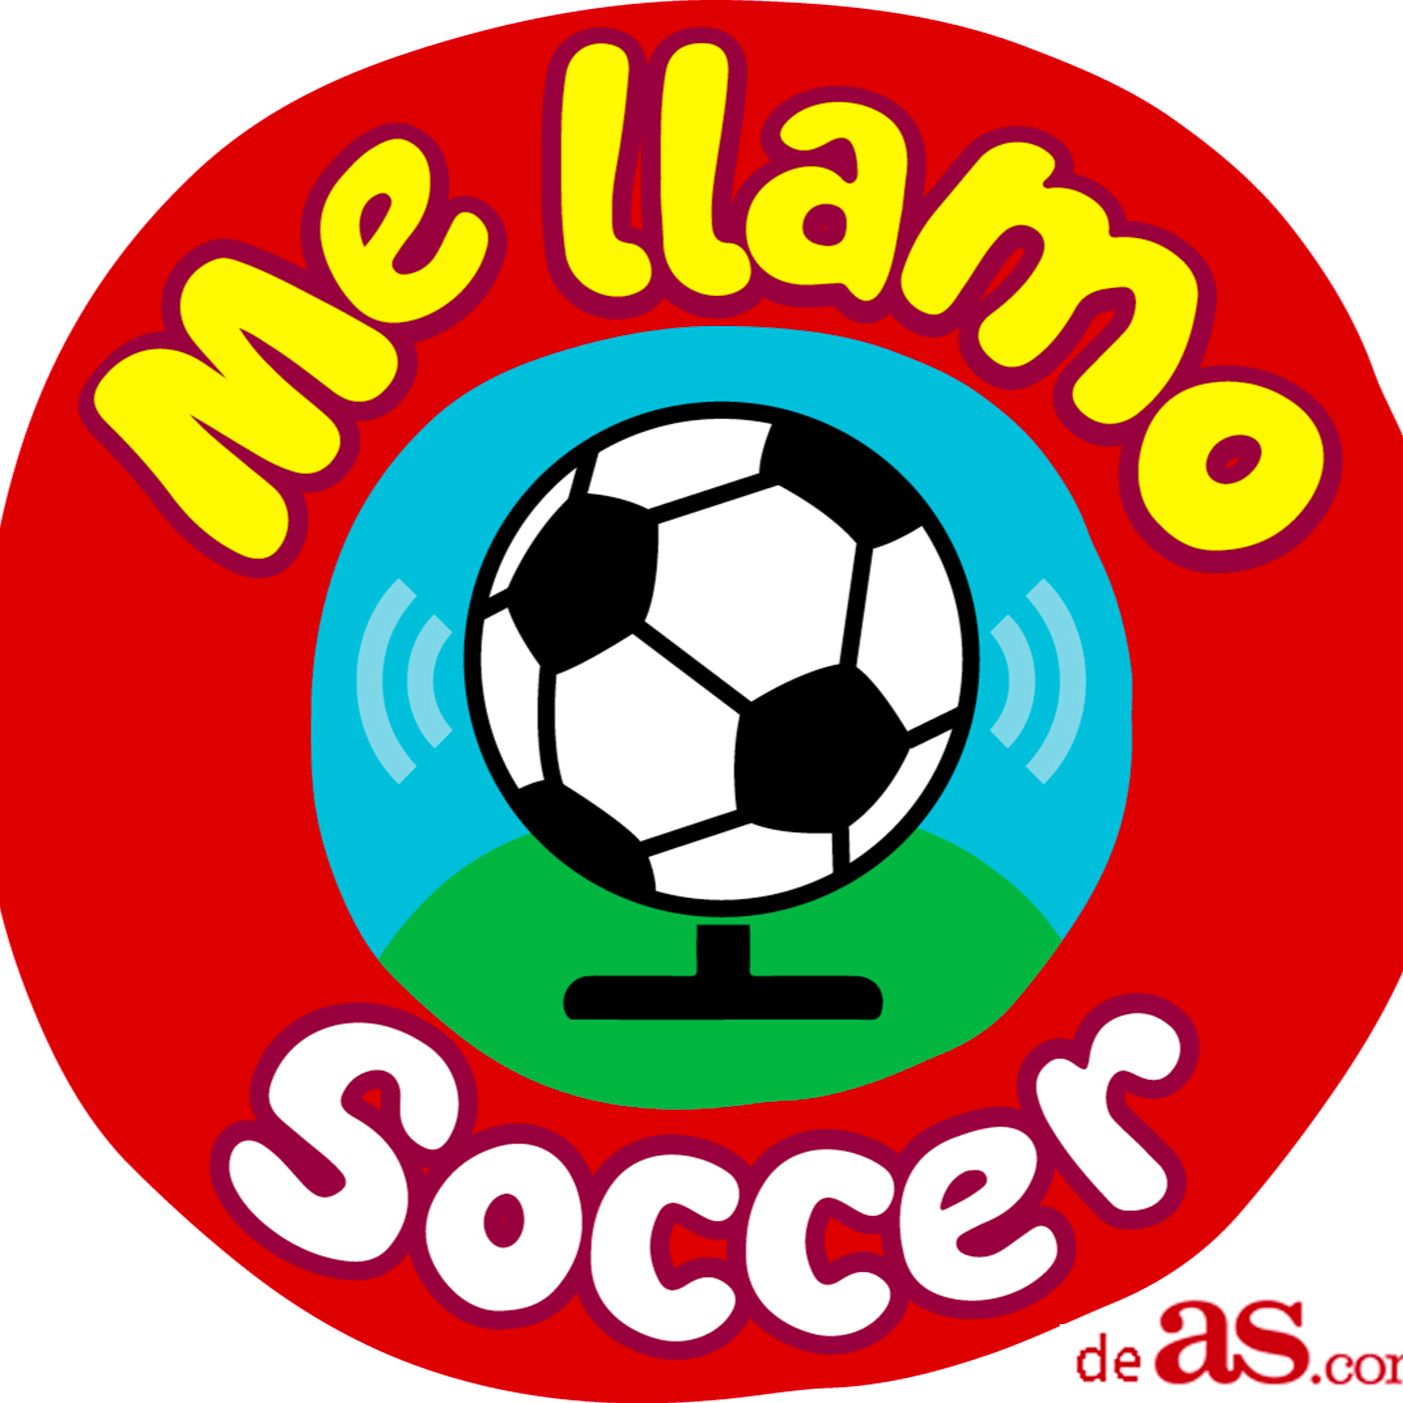 Me llamo Soccer, el podcast de fútbol en USA